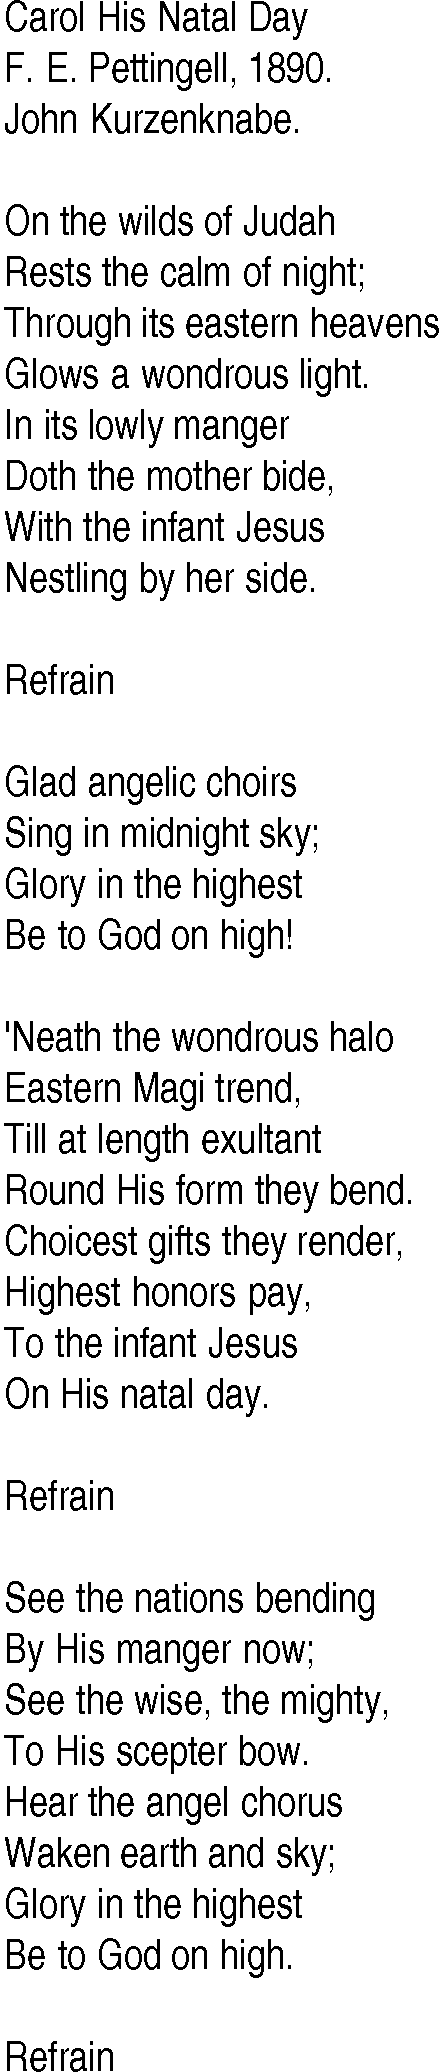 Hymn and Gospel Song: Carol His Natal Day by F E Pettingell lyrics